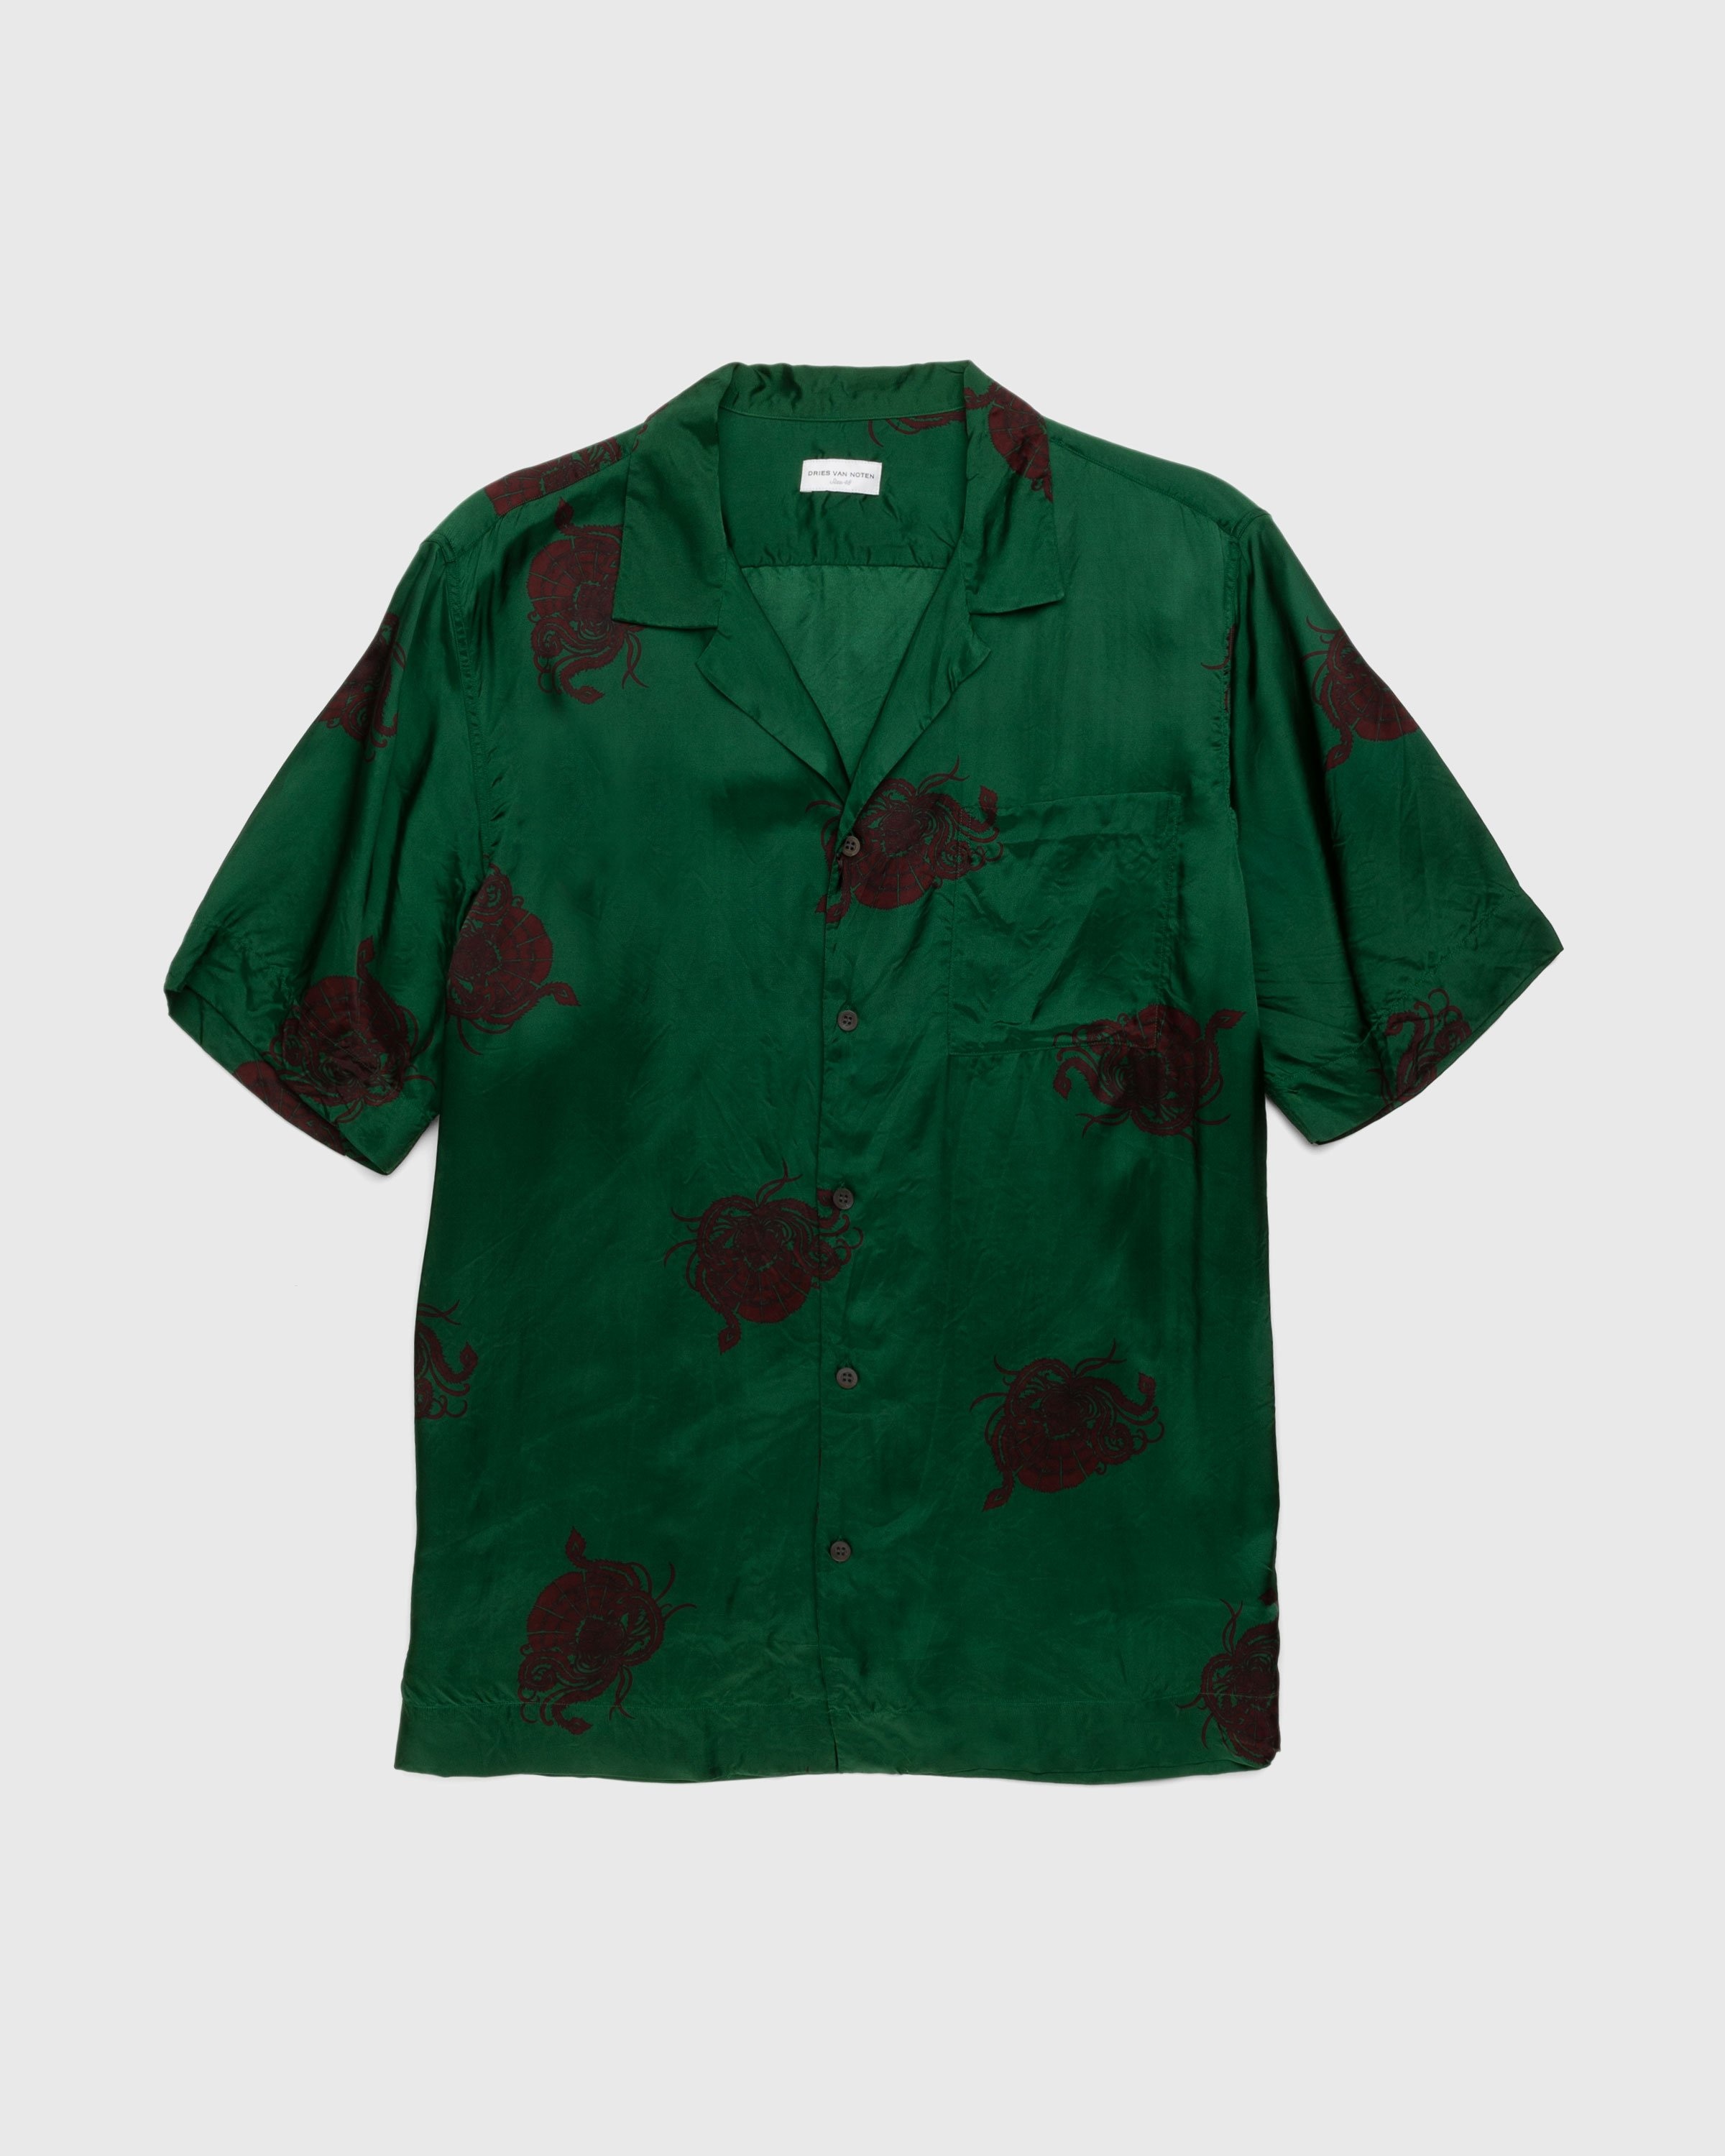 Dries van Noten – Carltone Shirt Bottle - Shortsleeve Shirts - Green - Image 1